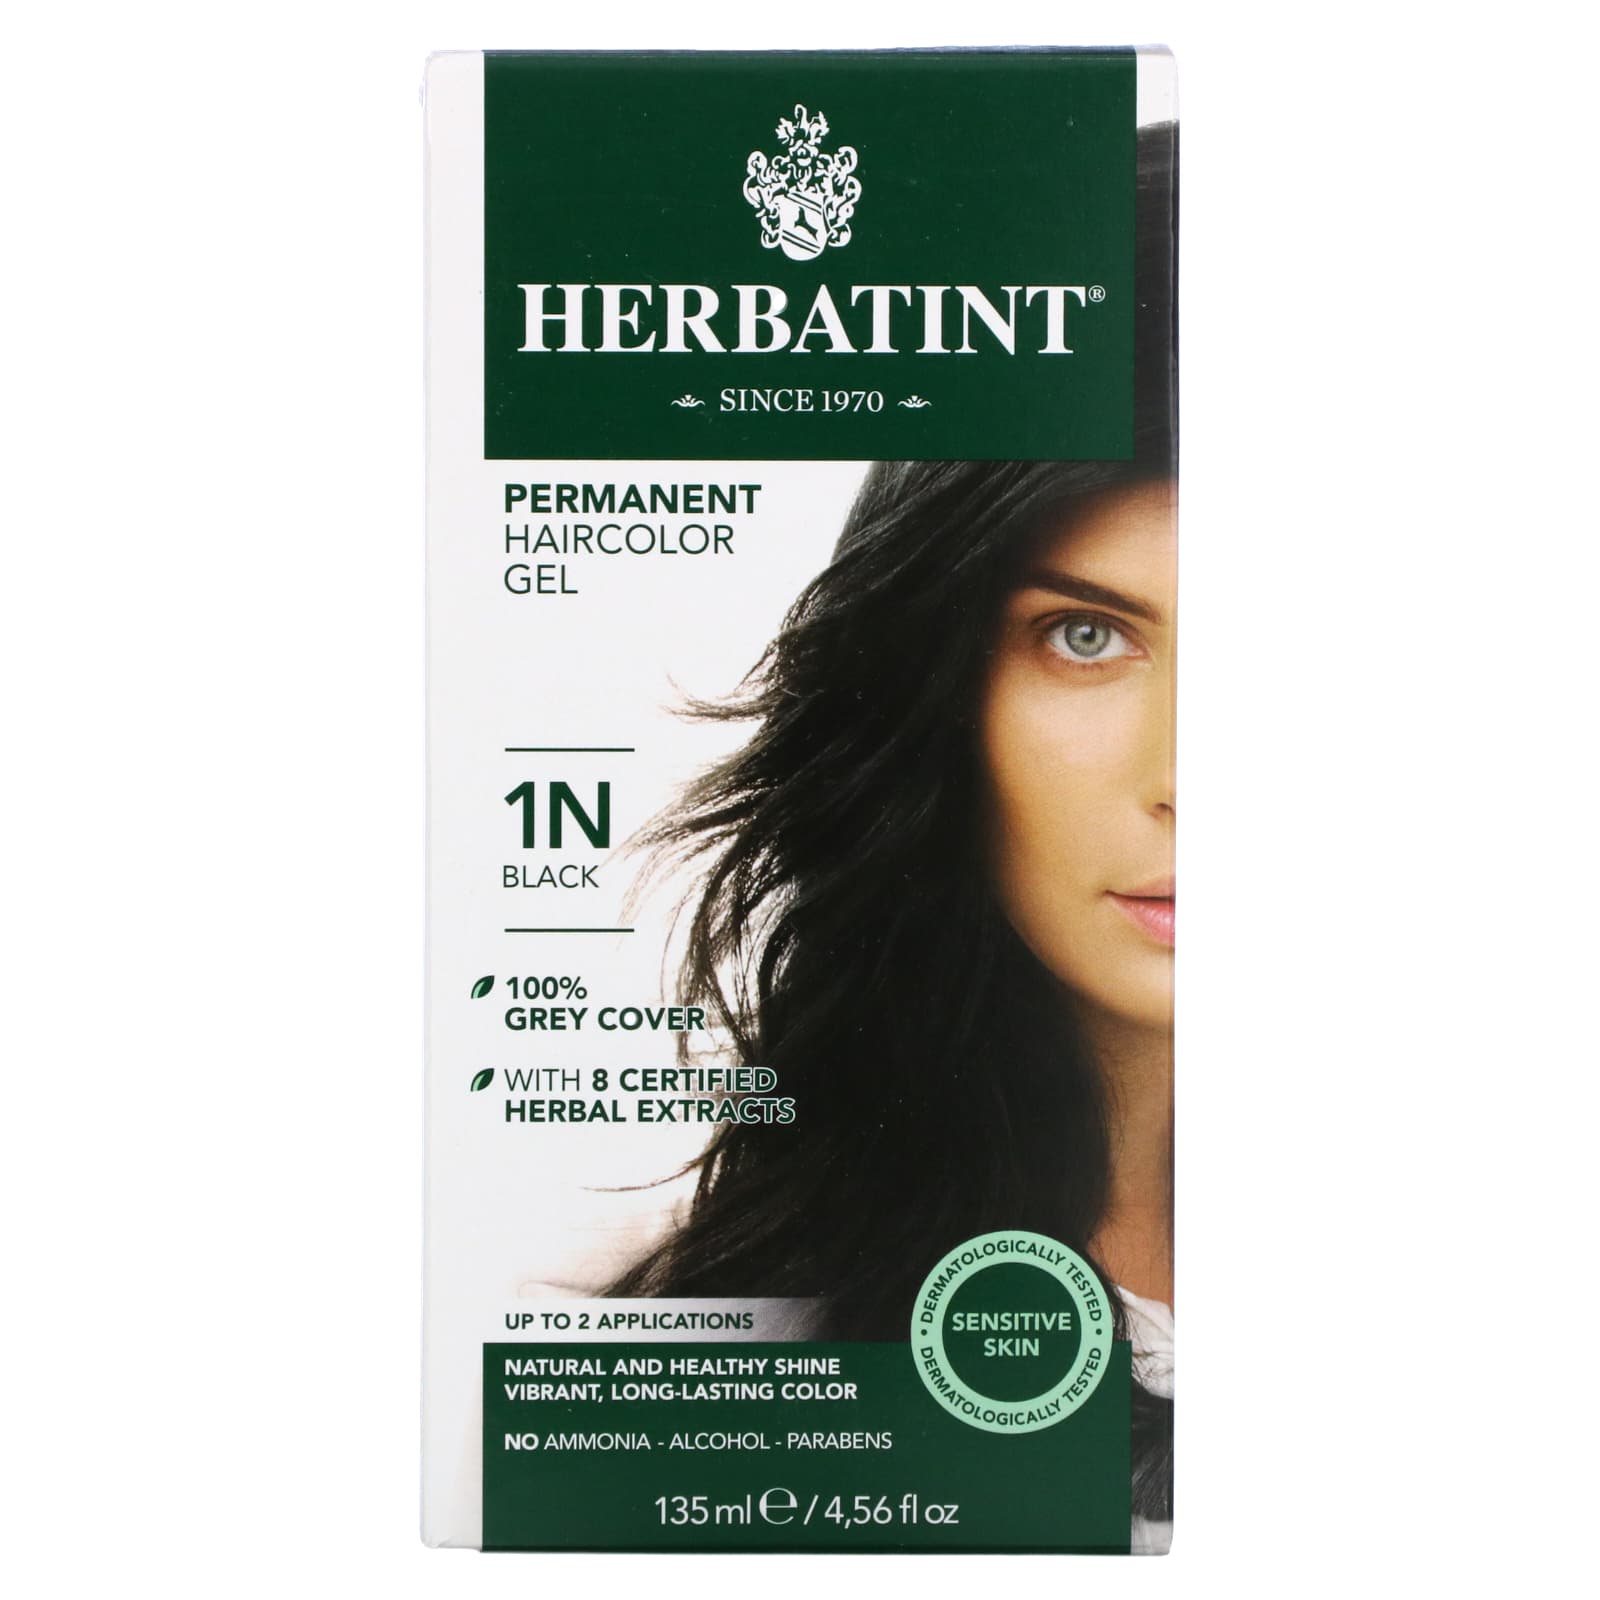 Herbatint permanent haircolor gel 1N black price